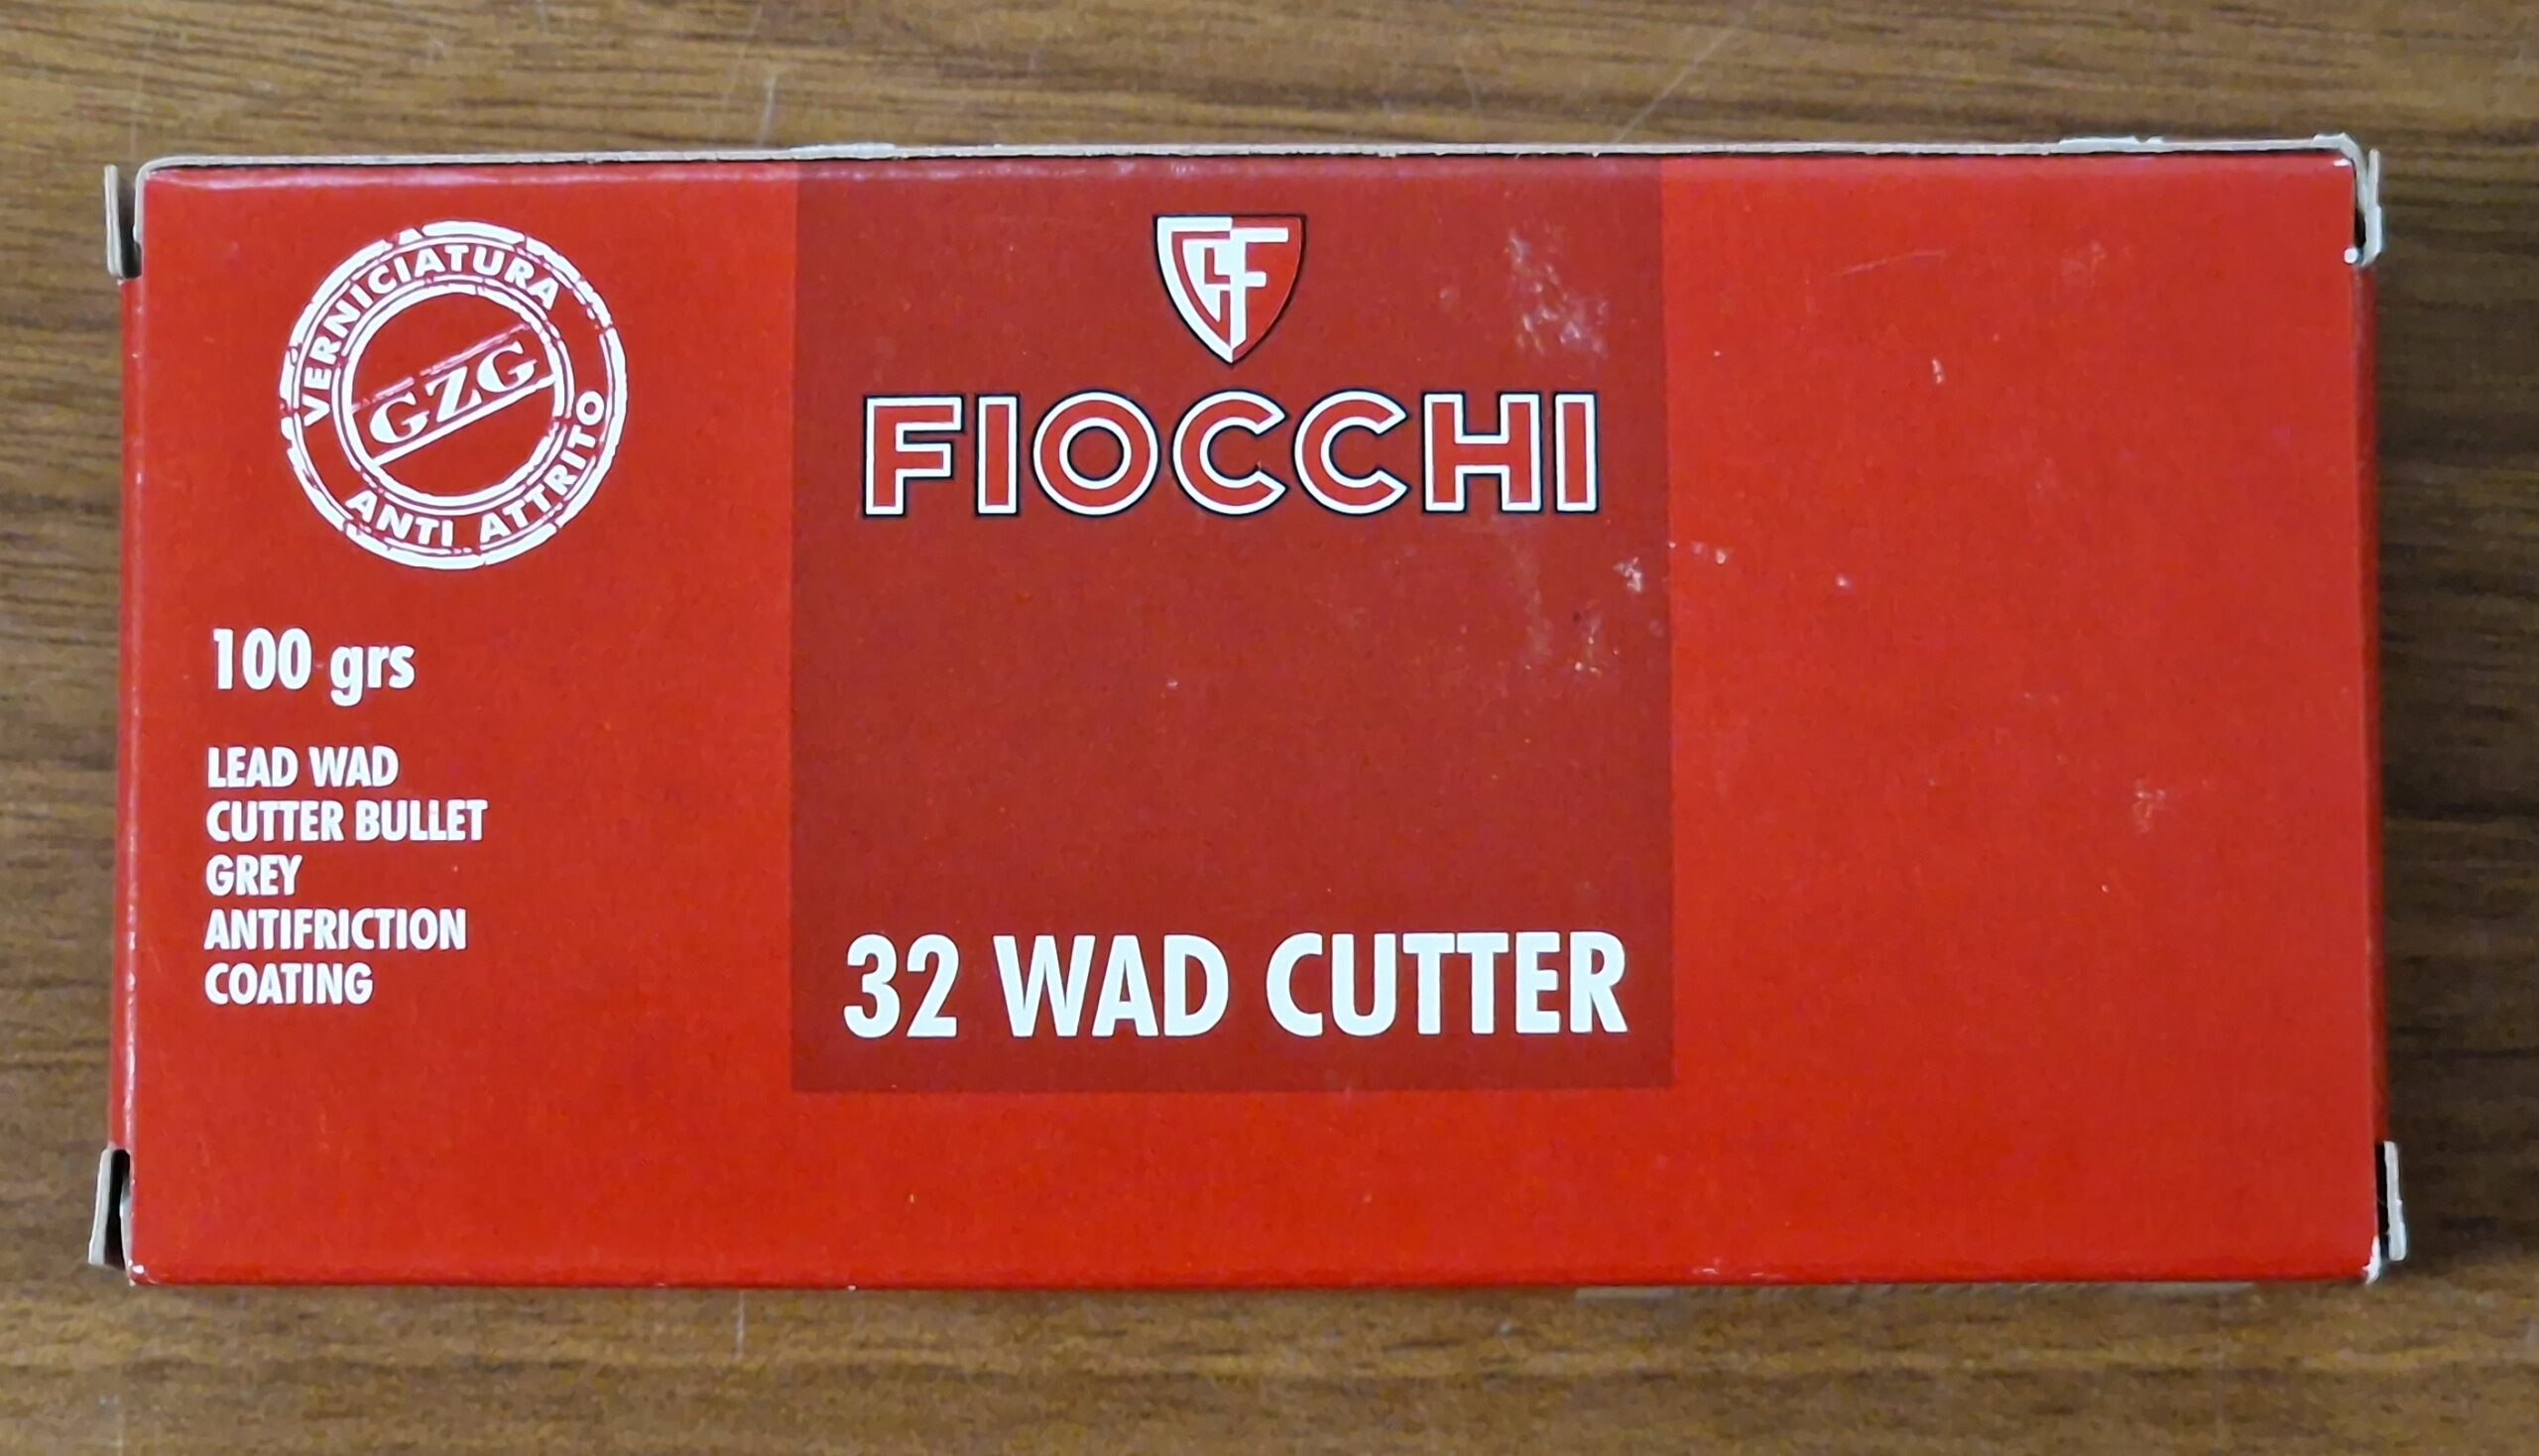 Fiocchi 32 wad cutter main image